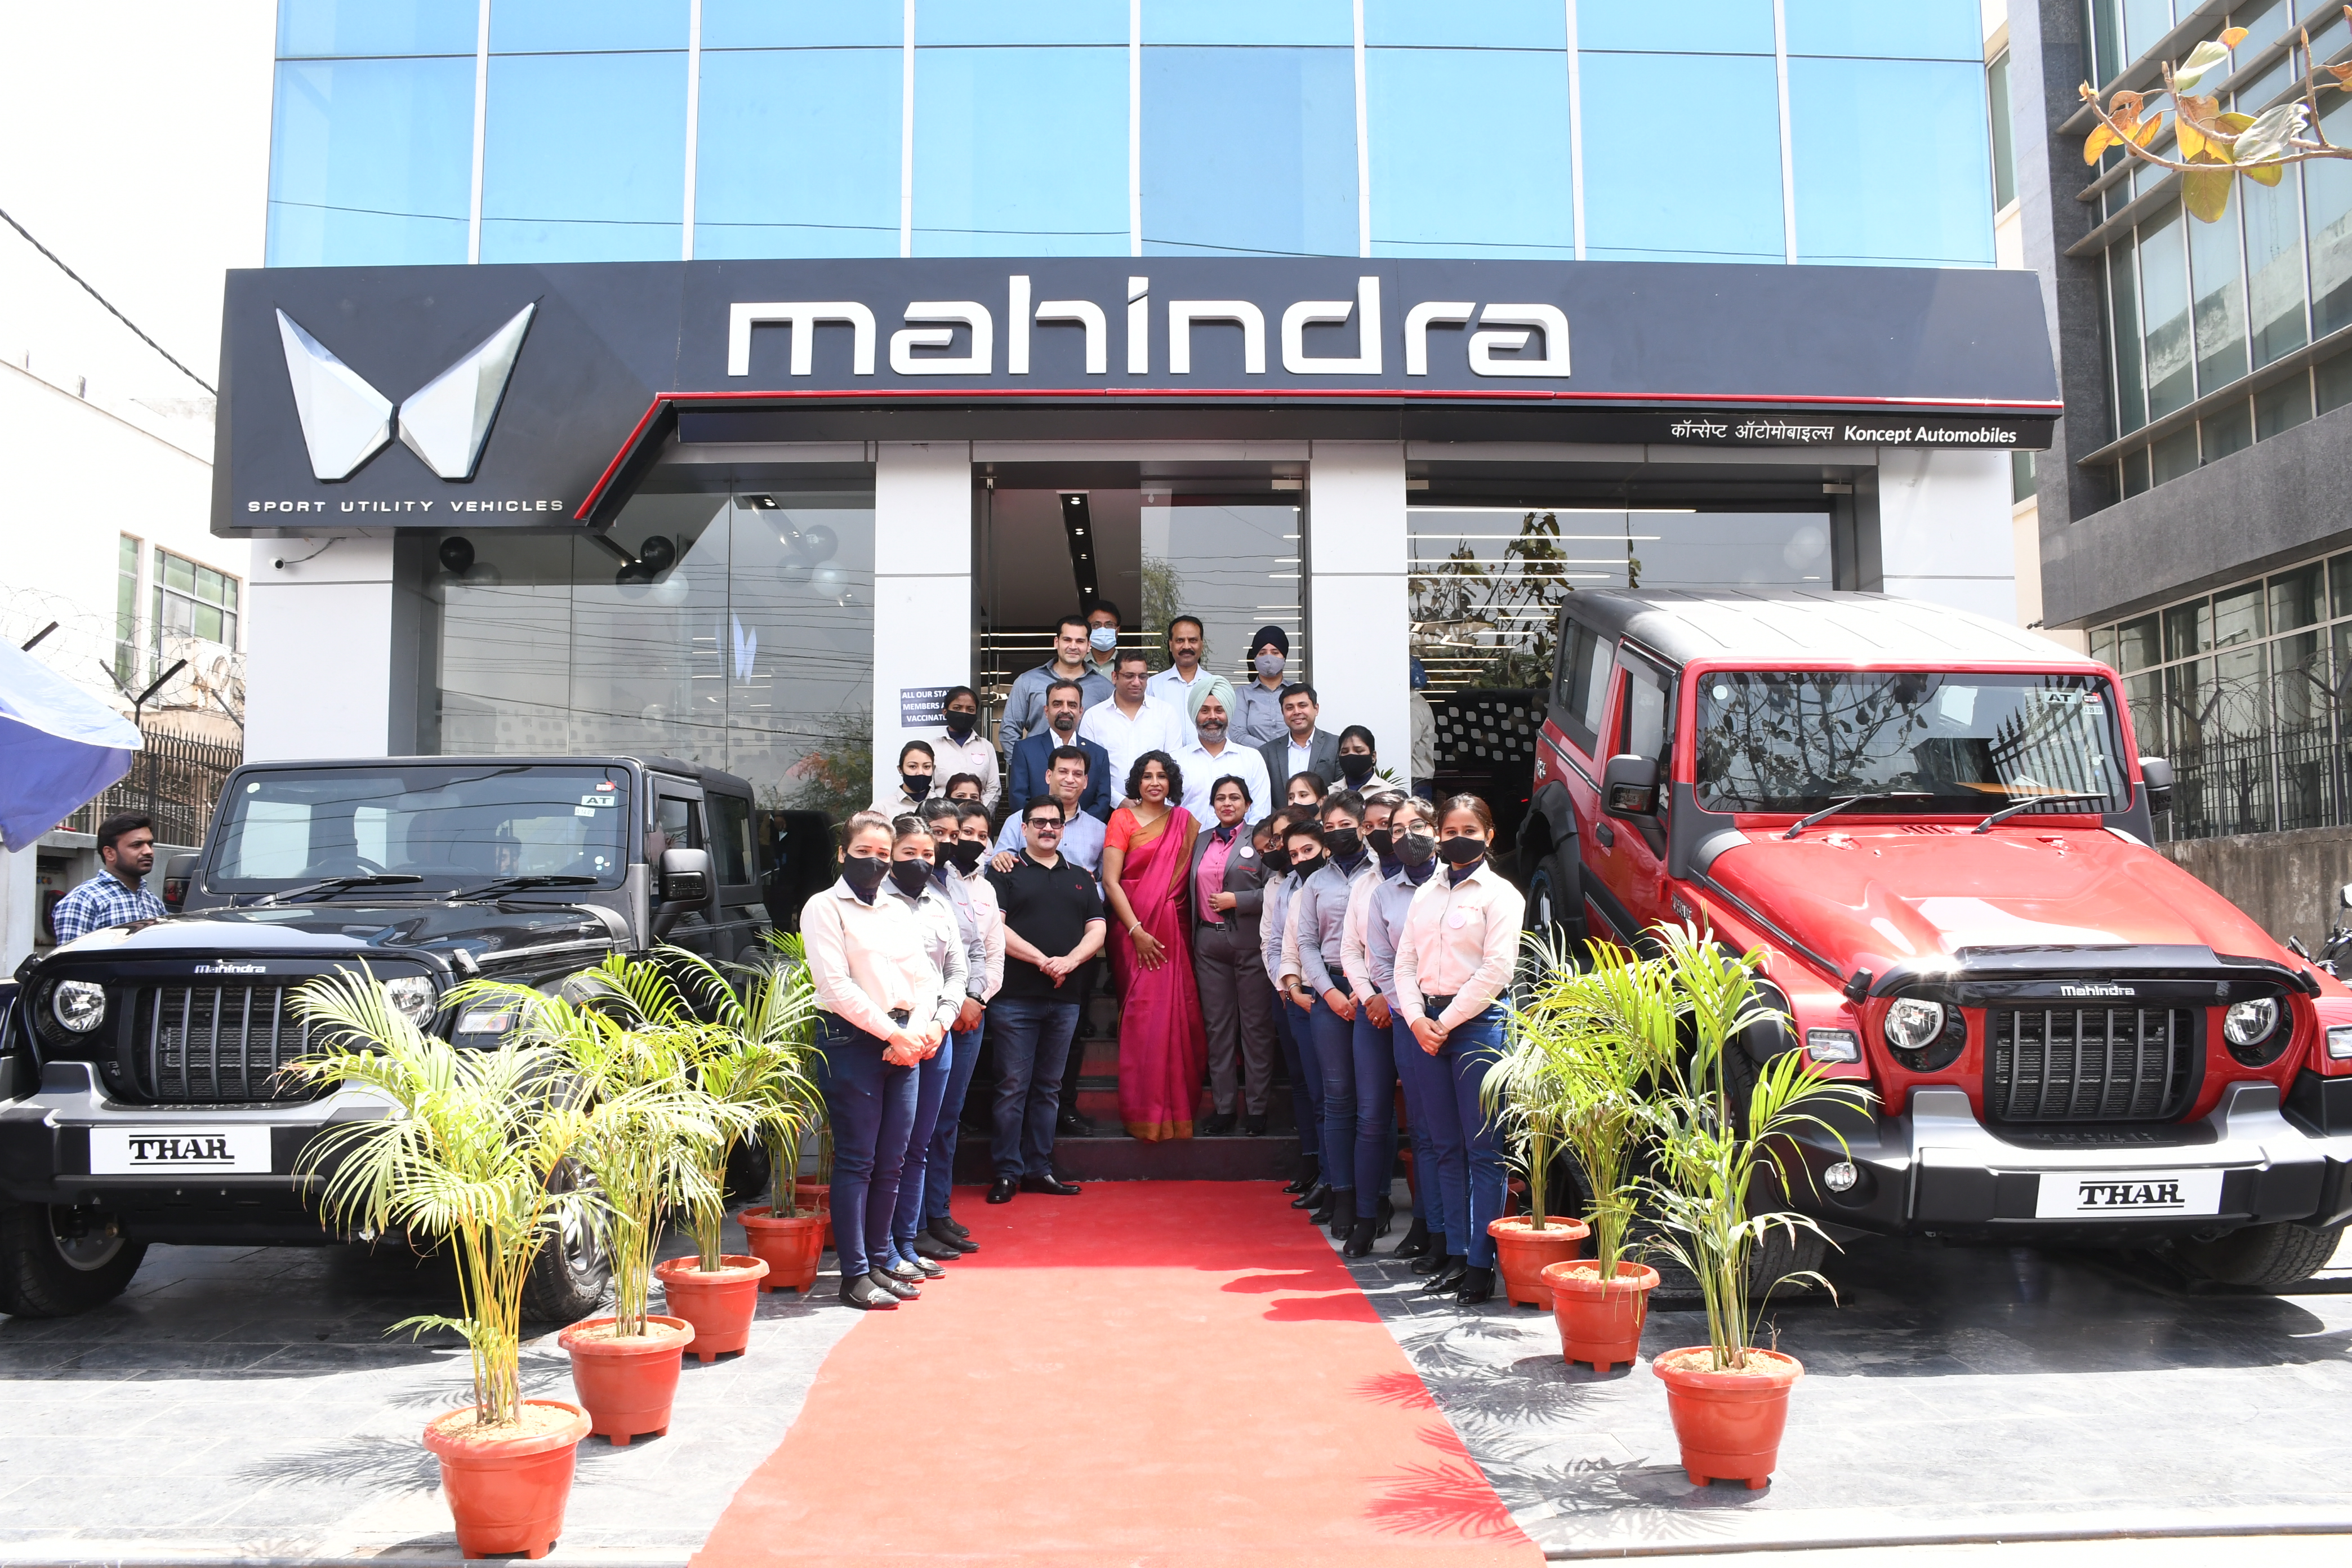 Koncept Automobiles, Mahindra opened its All – Women Showroom in Delhi